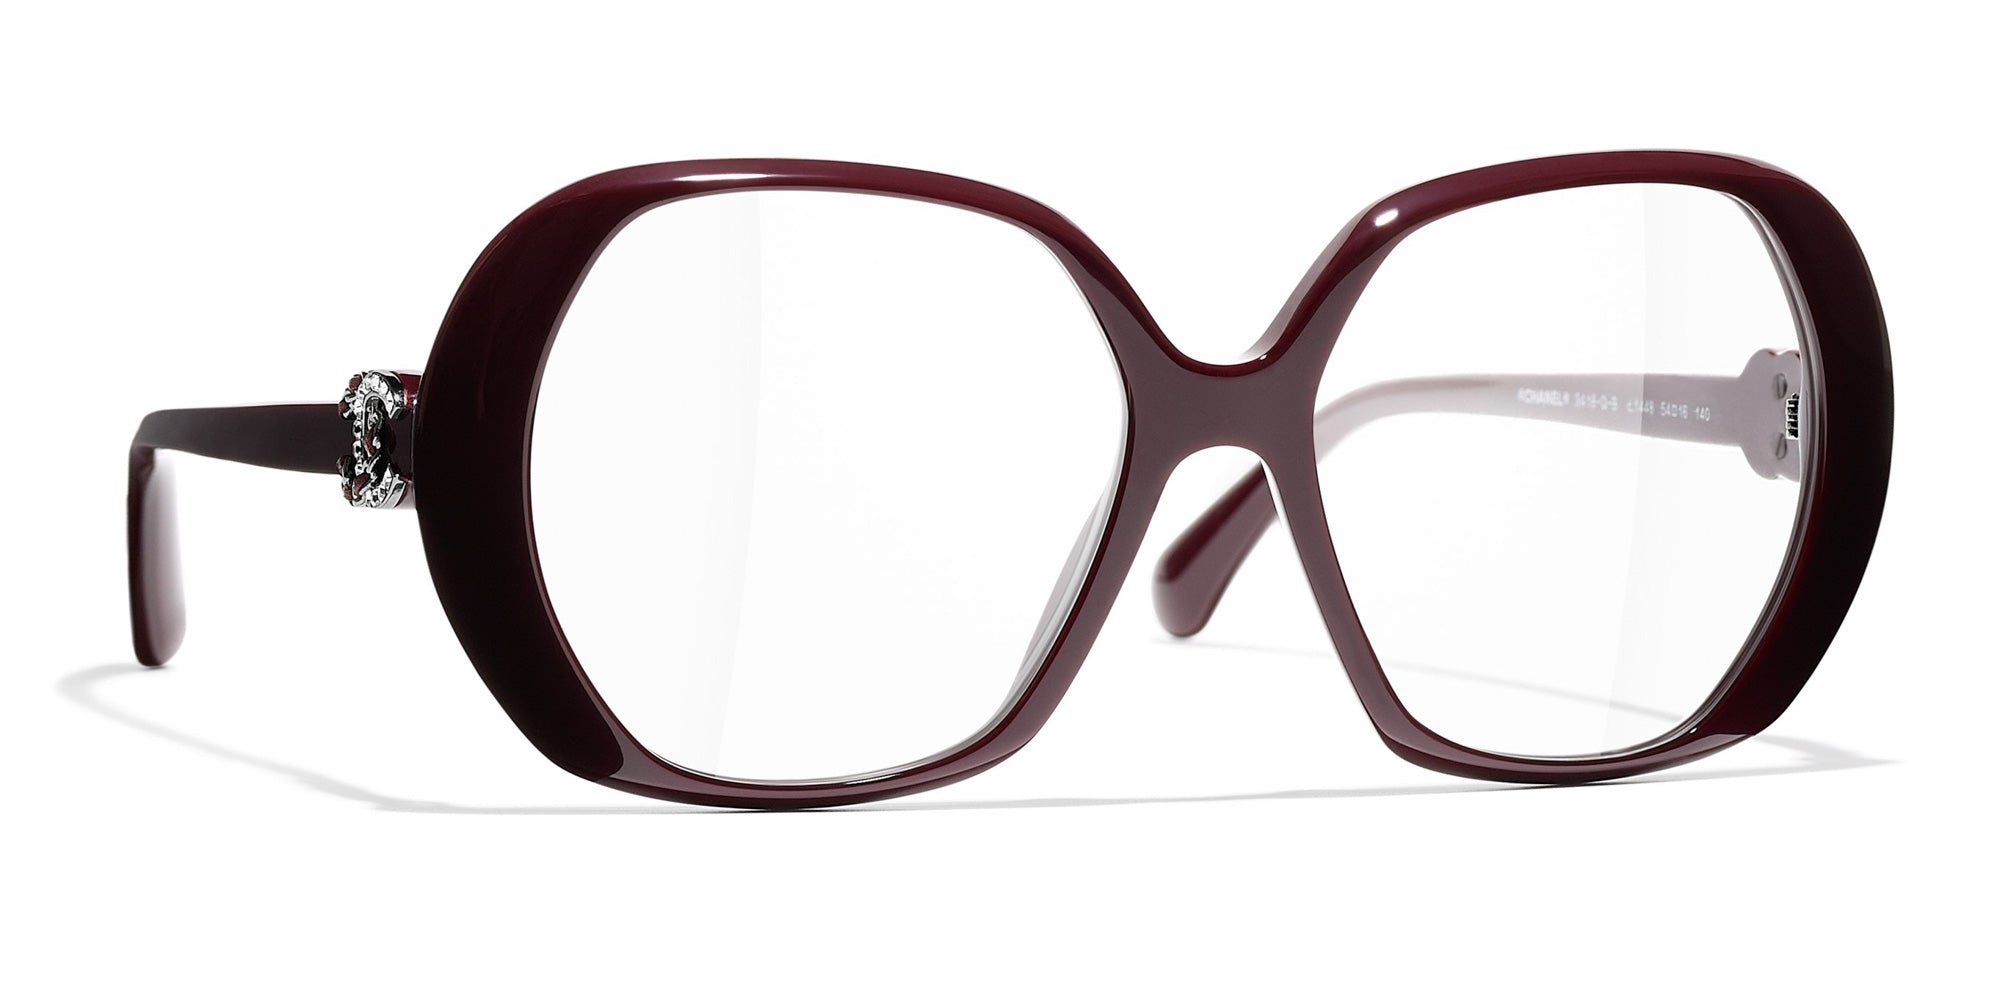 Get the best deals on CHANEL Women's Metal Eyeglass Frames when